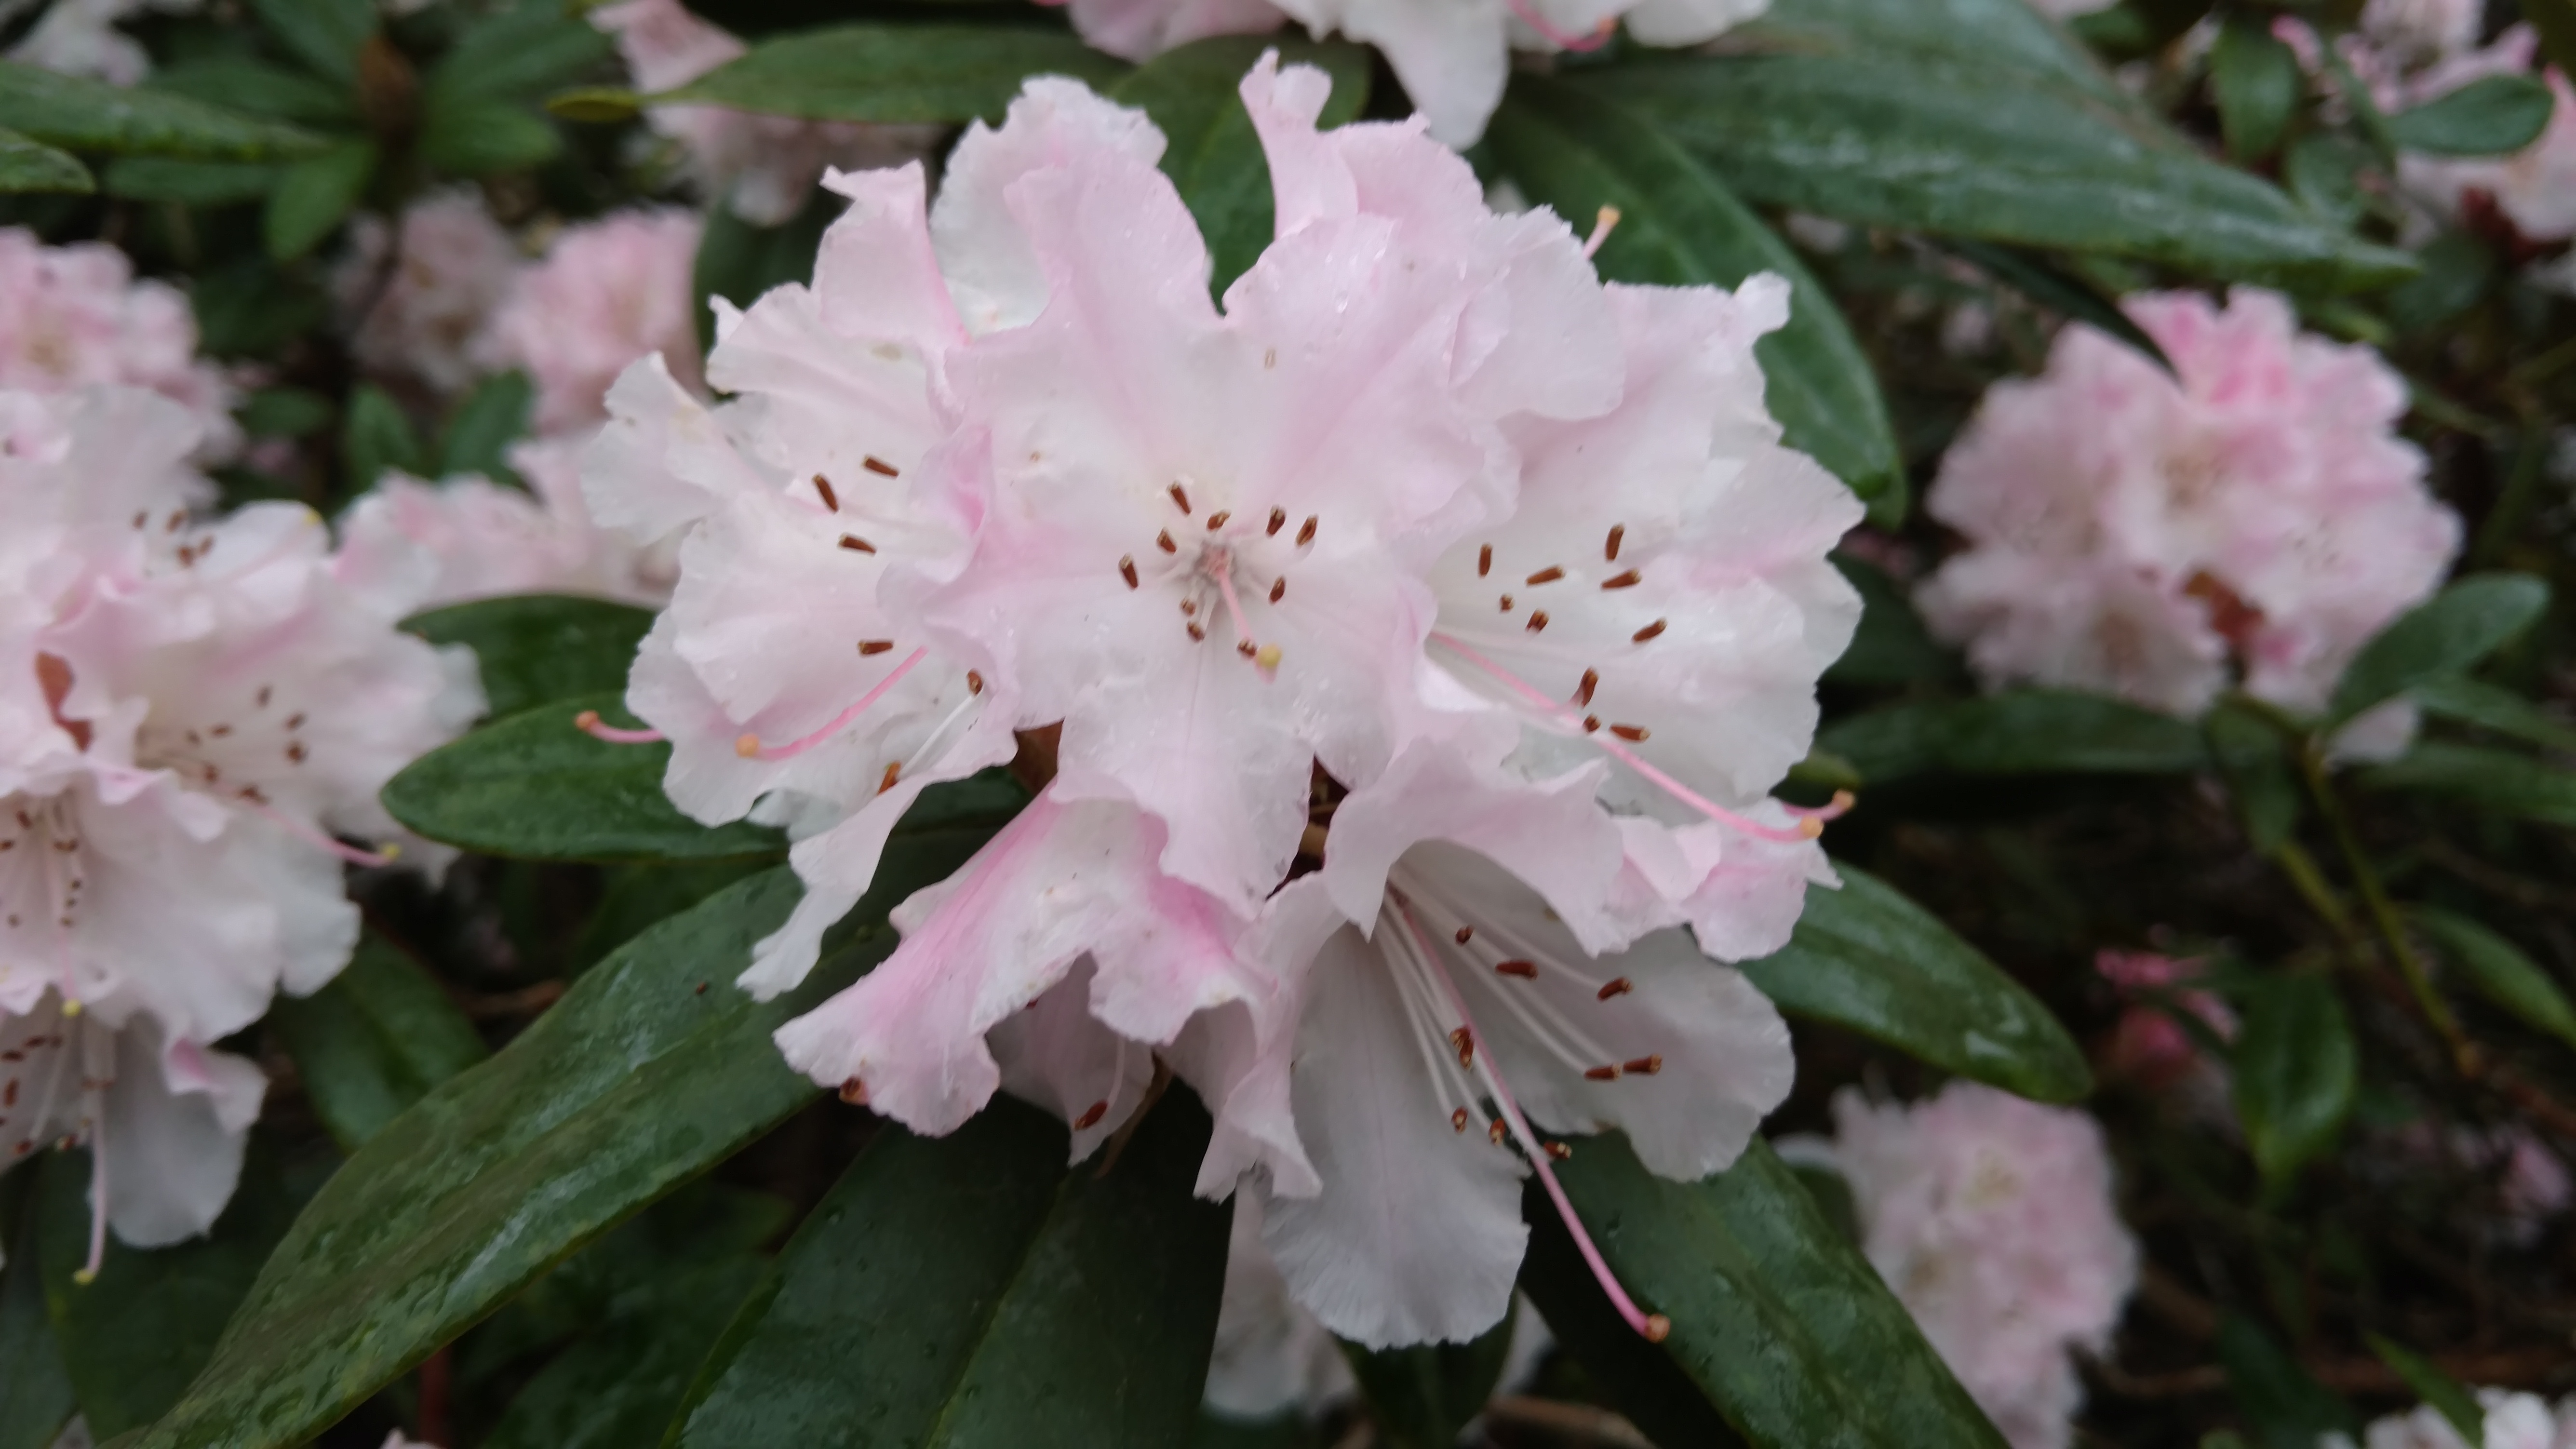 Rhododendron spp plantplacesimage20170304_165635.jpg